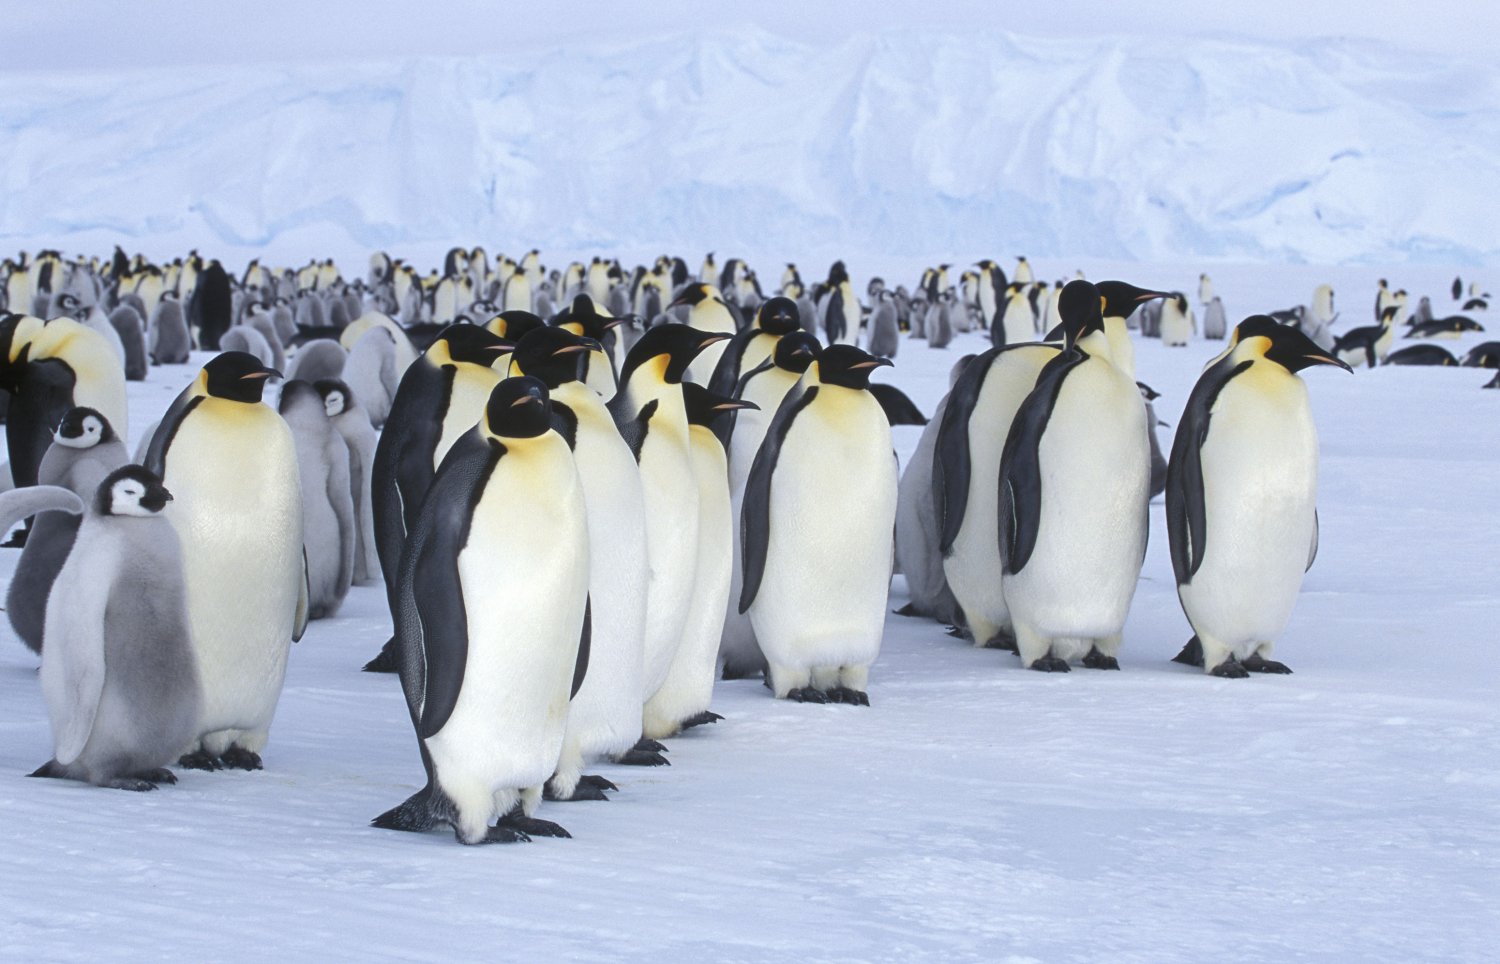 emperor pinguino oceanwide expeditions emperador antartida departures announces expedition polarjournal